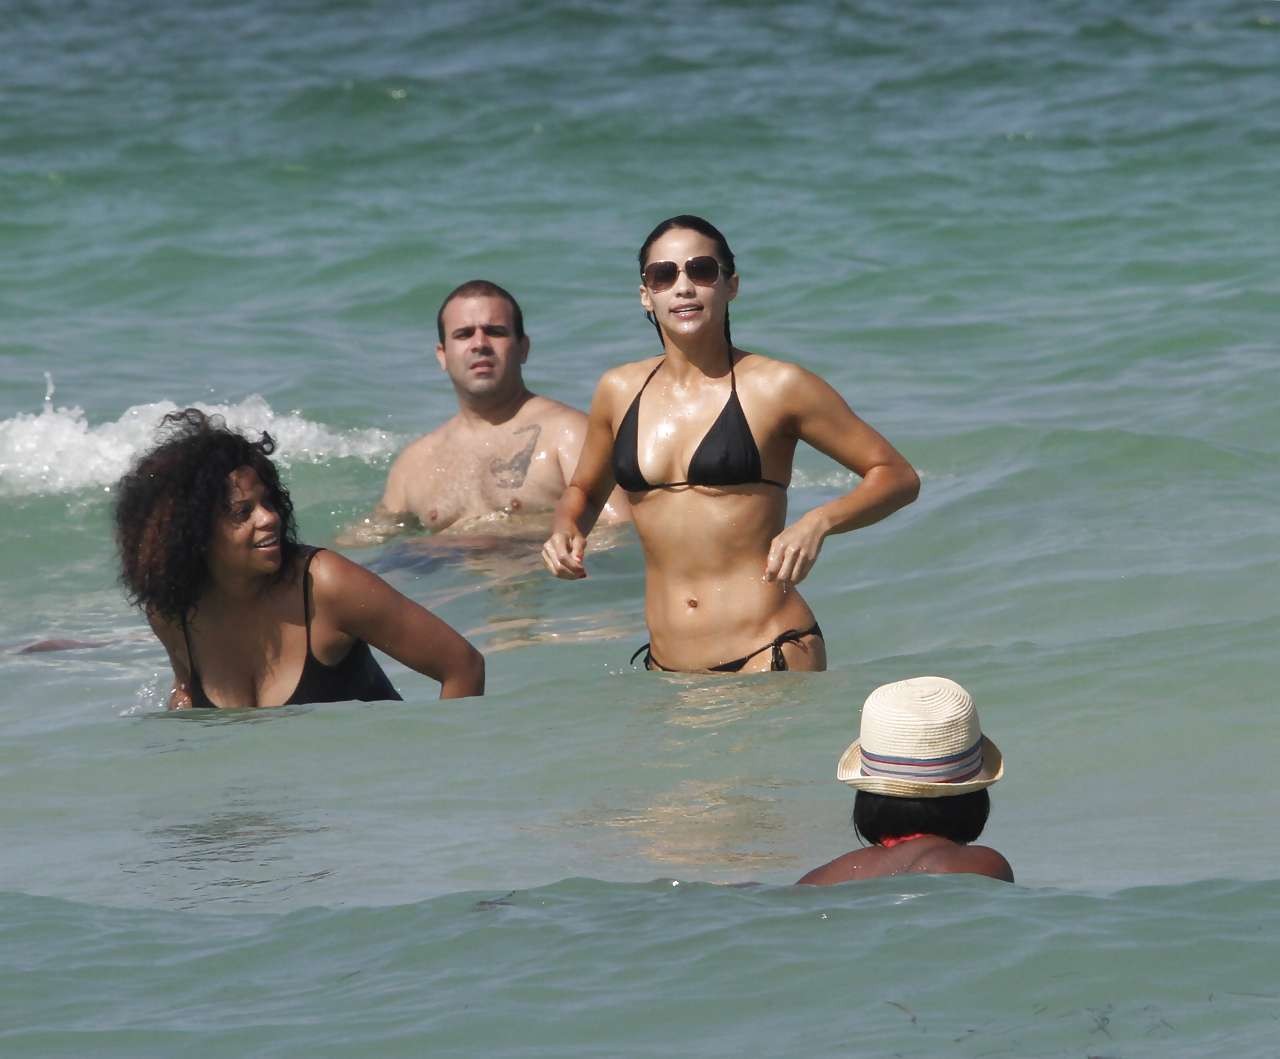 Paula Patton looking very sexy in skimpy black bikini on beach paparazzi picture #75296606